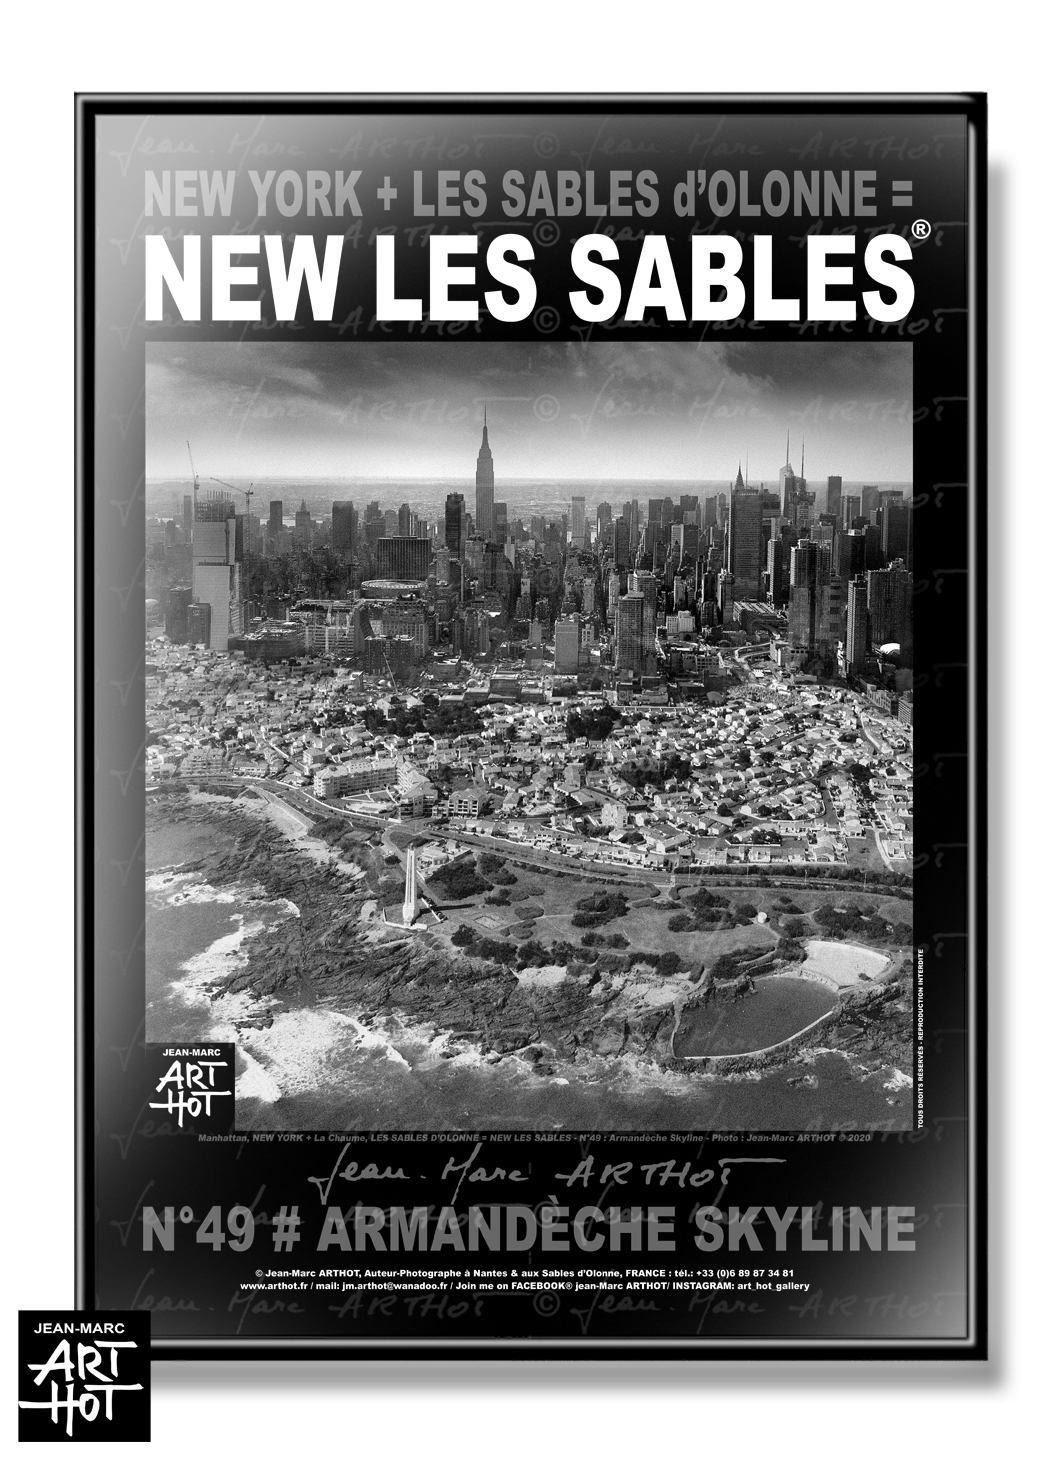 arthot-photo-art-b&amp;w-new-york-vendee-sables-olonne-newlessables-049-arundel-aero-AFFICHE